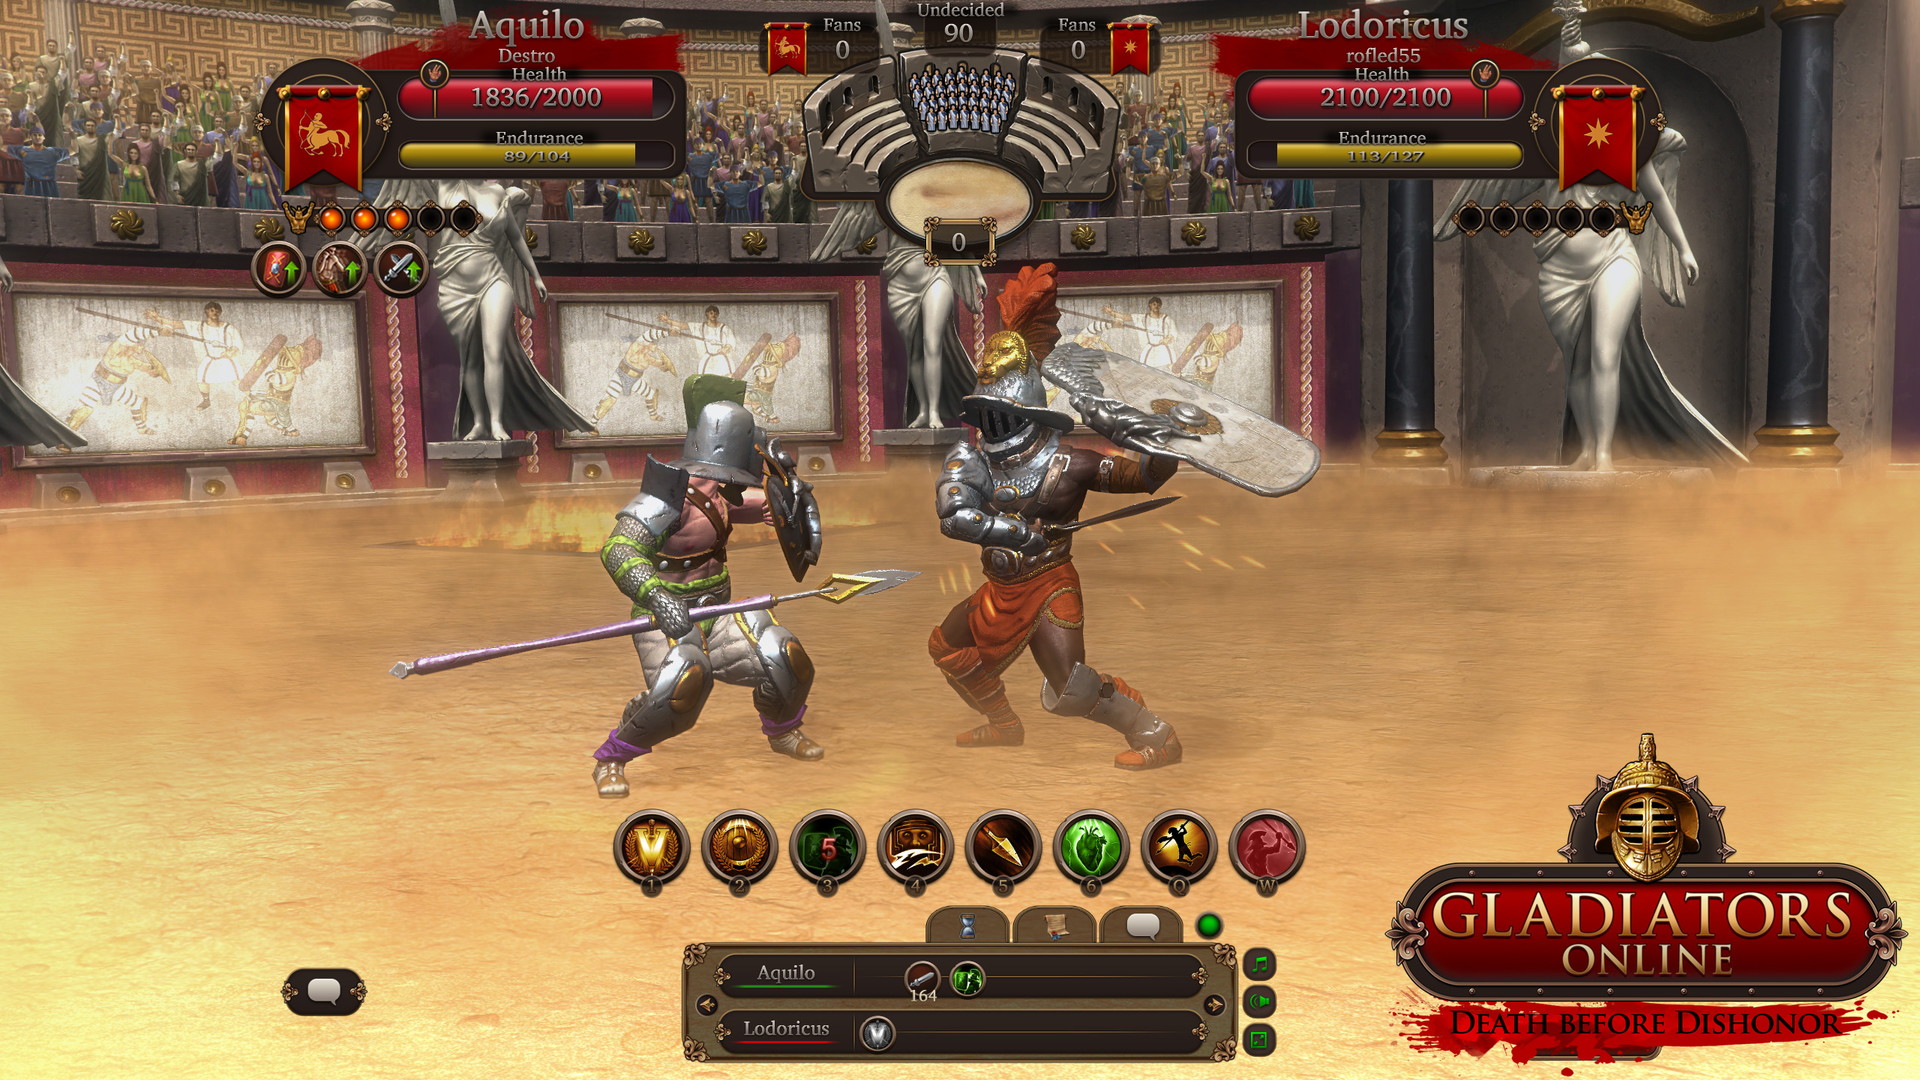 Gladiators Online: Death Before Dishonor - screenshot 15